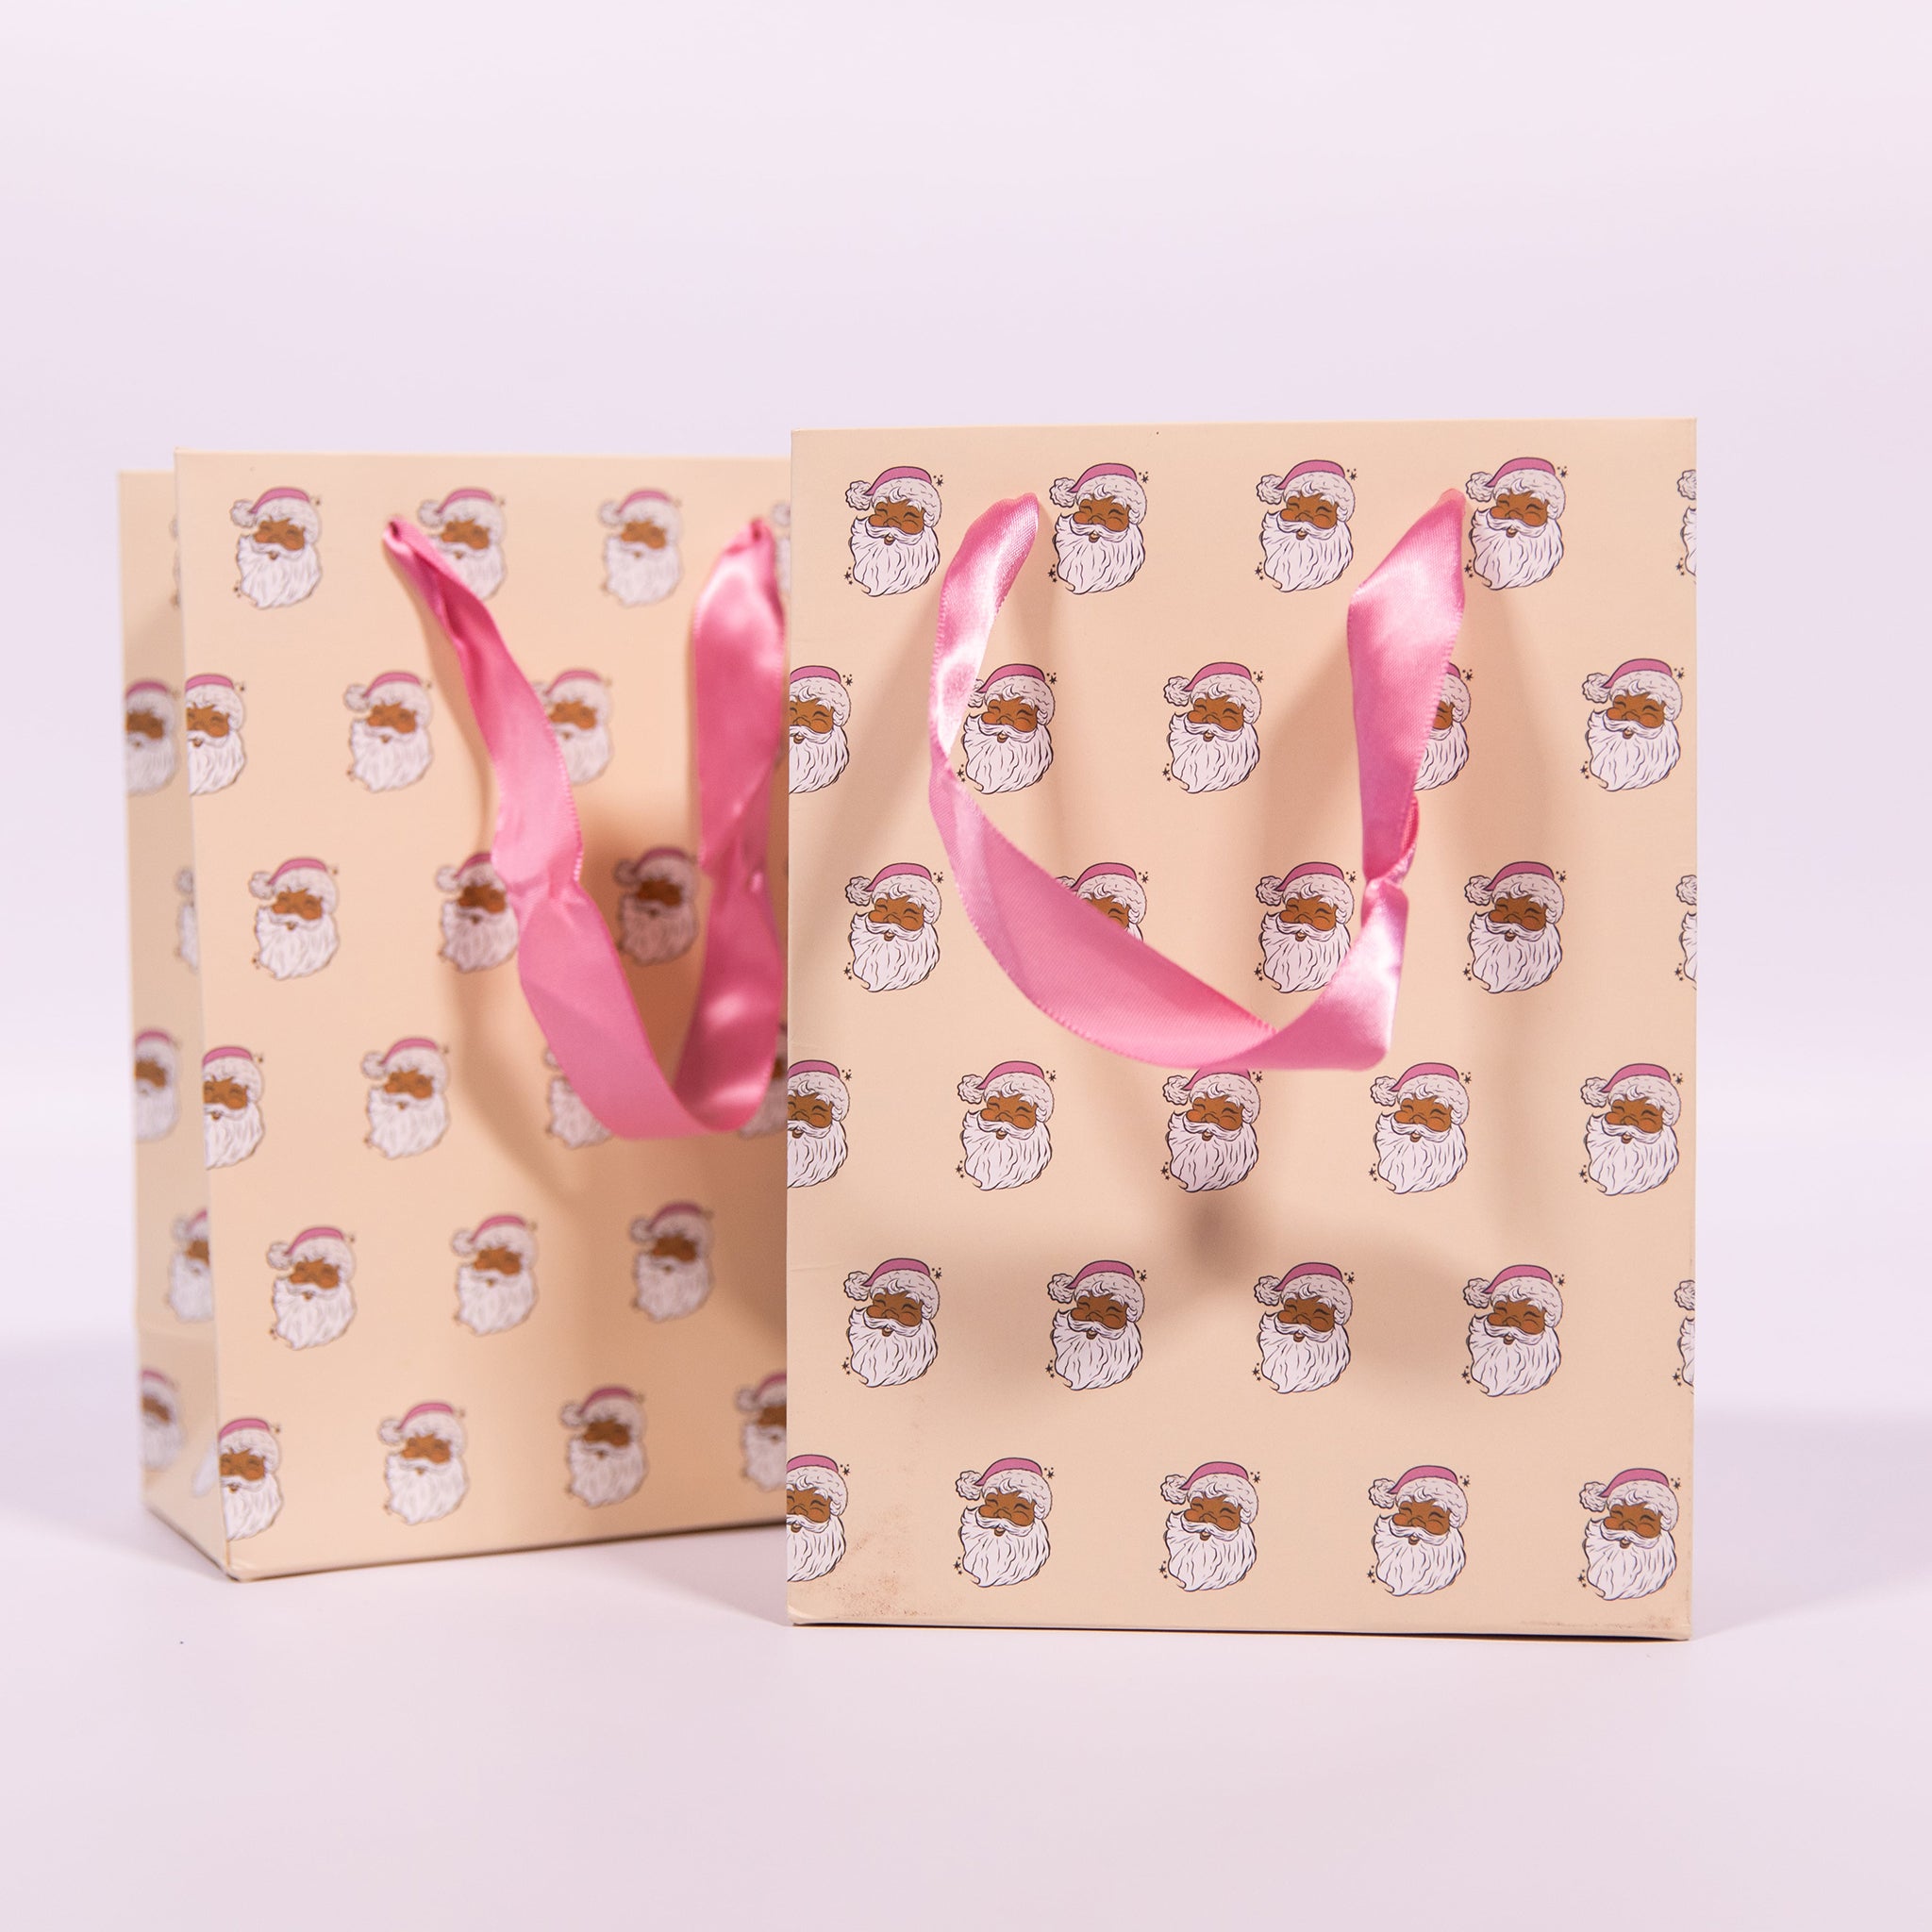 Black Santas with Pink Hat Gift Bags | Set of 2